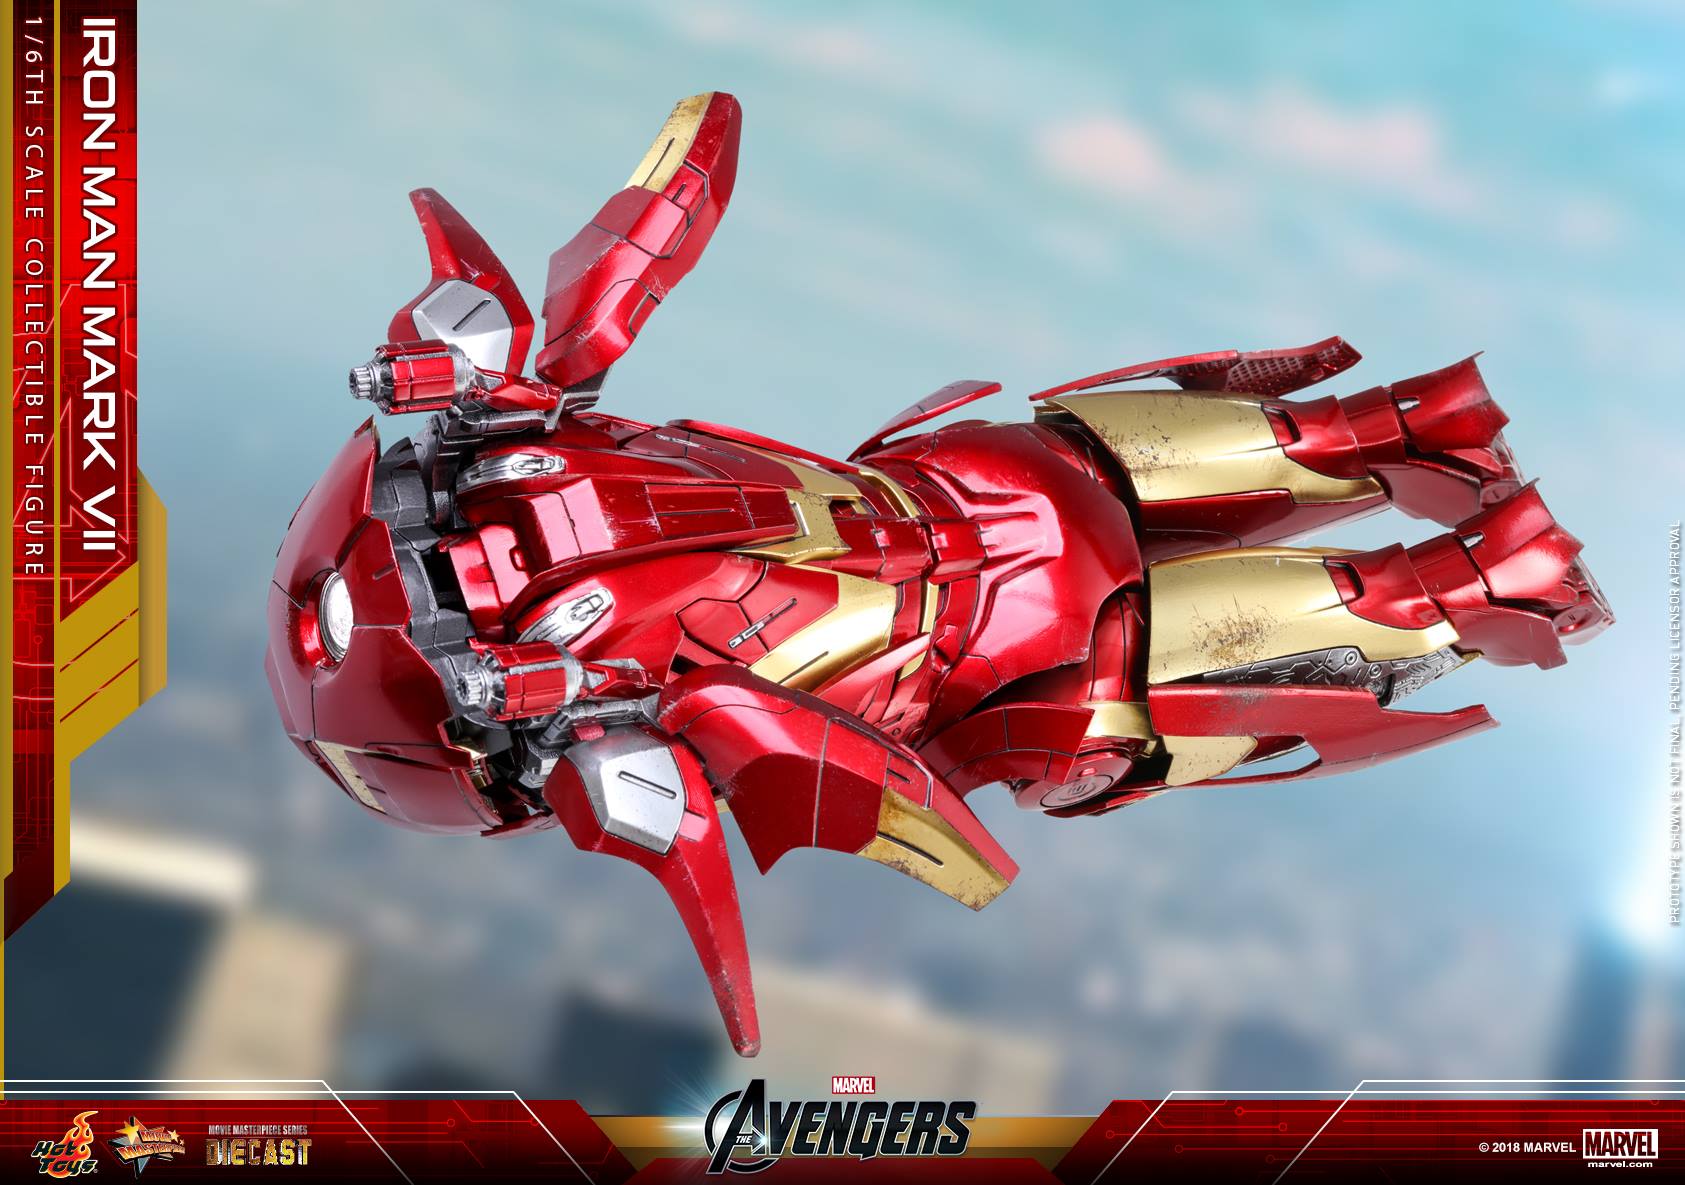 Hot Toys - MMS500D27 - The Avengers - Iron Man Mark VII (Diecast) - Marvelous Toys